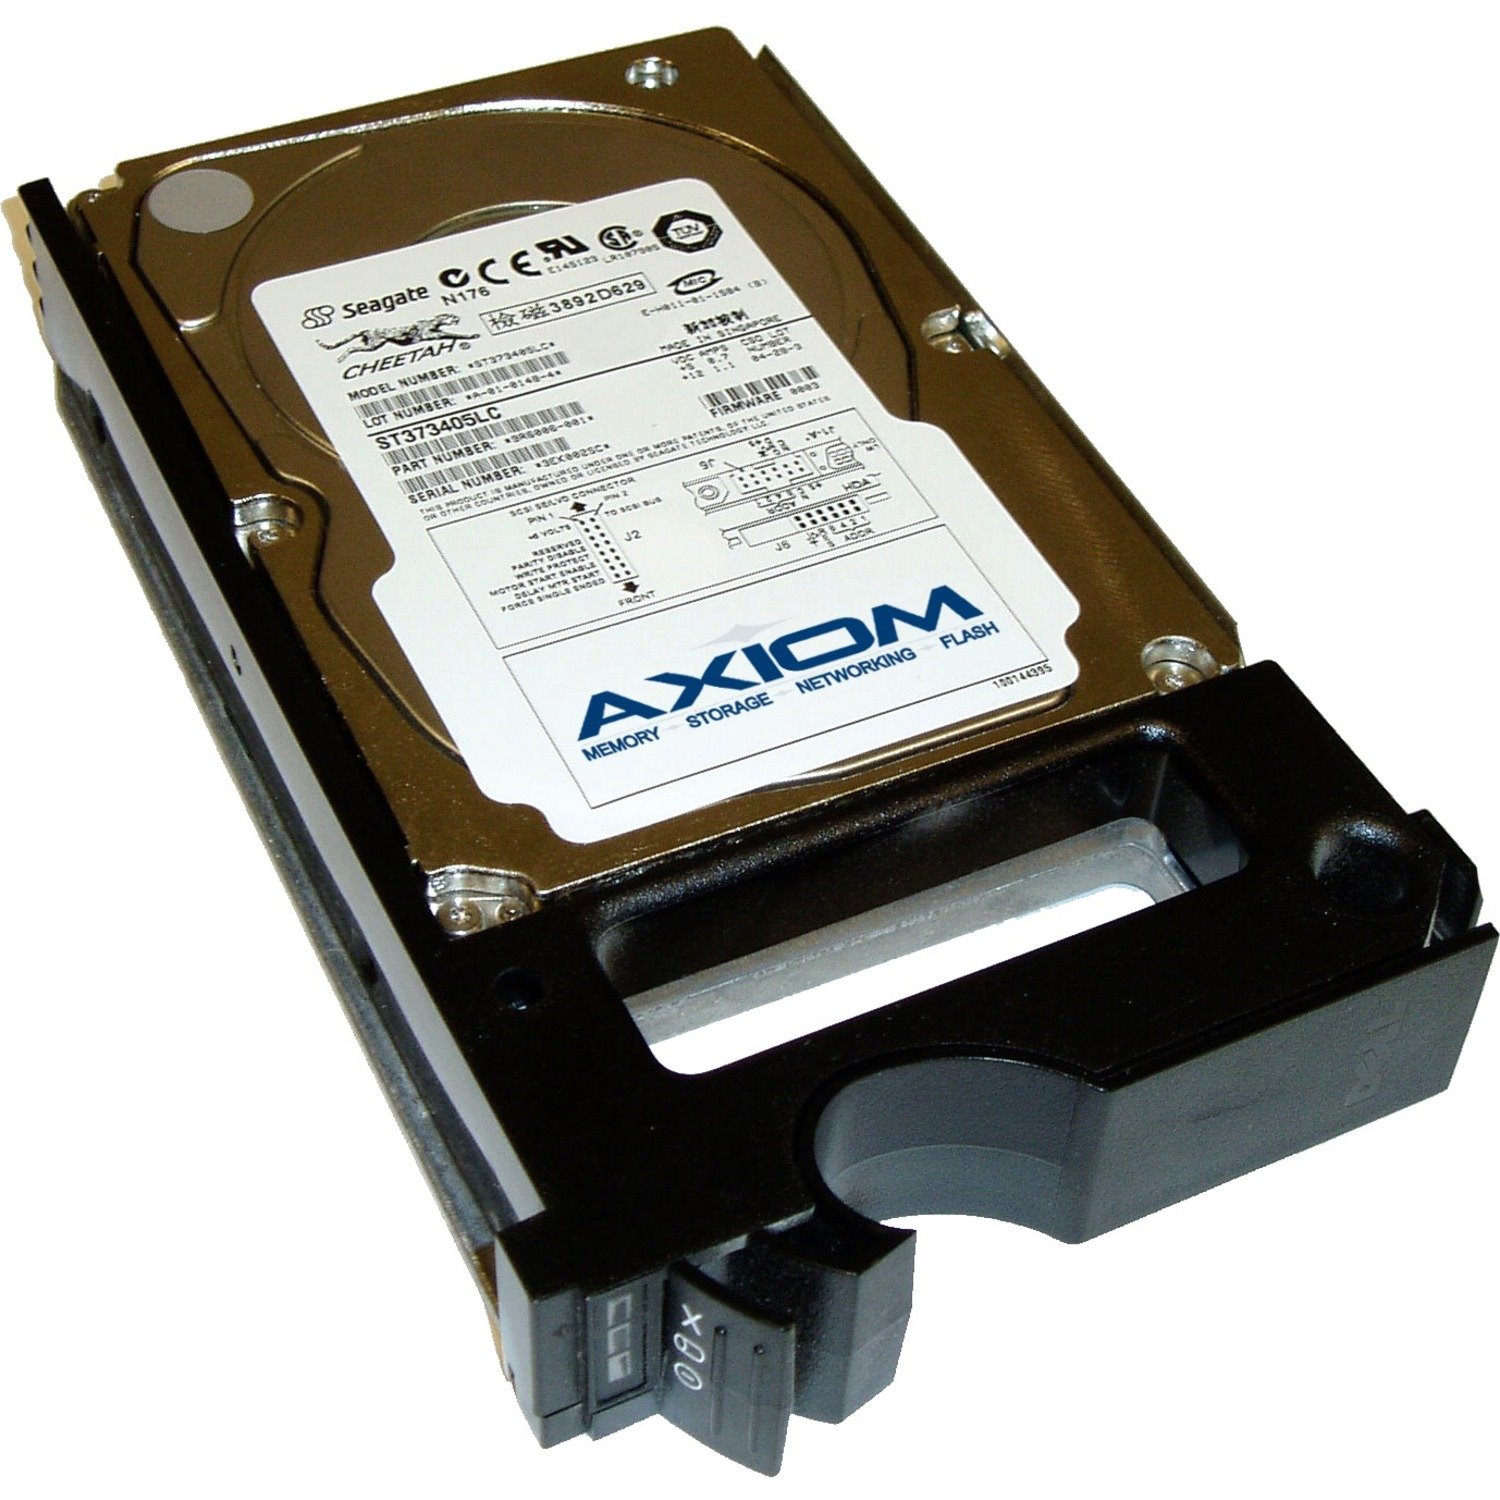 Accortec 600 GB Hard Drive - 3.5" Internal - SAS (6Gb/s SAS)